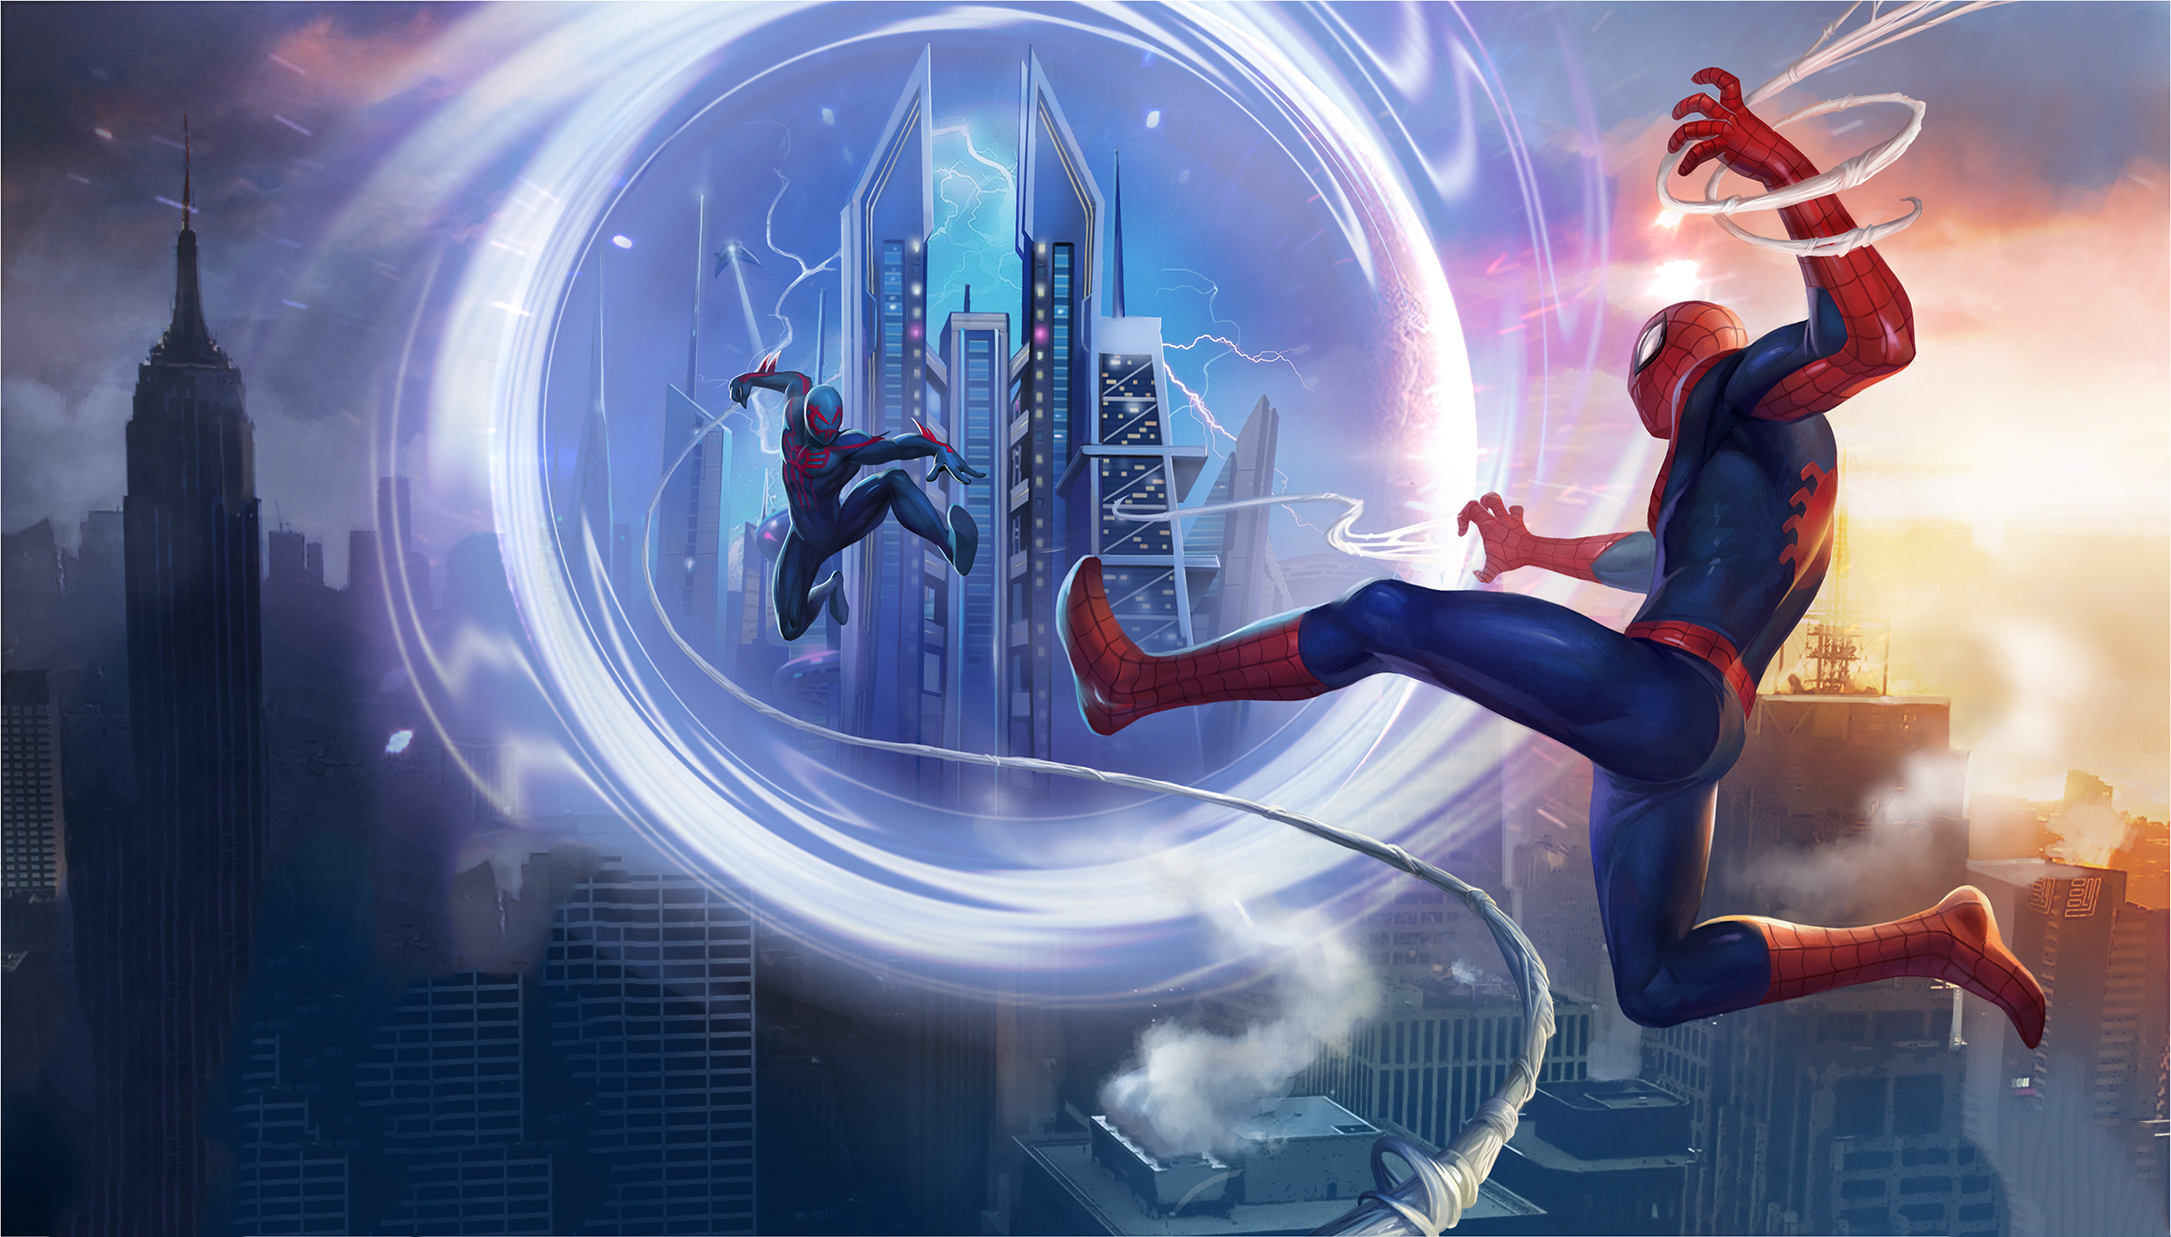 SpiderMan Unlimited  IIlustration HD  Superheroes 4k 